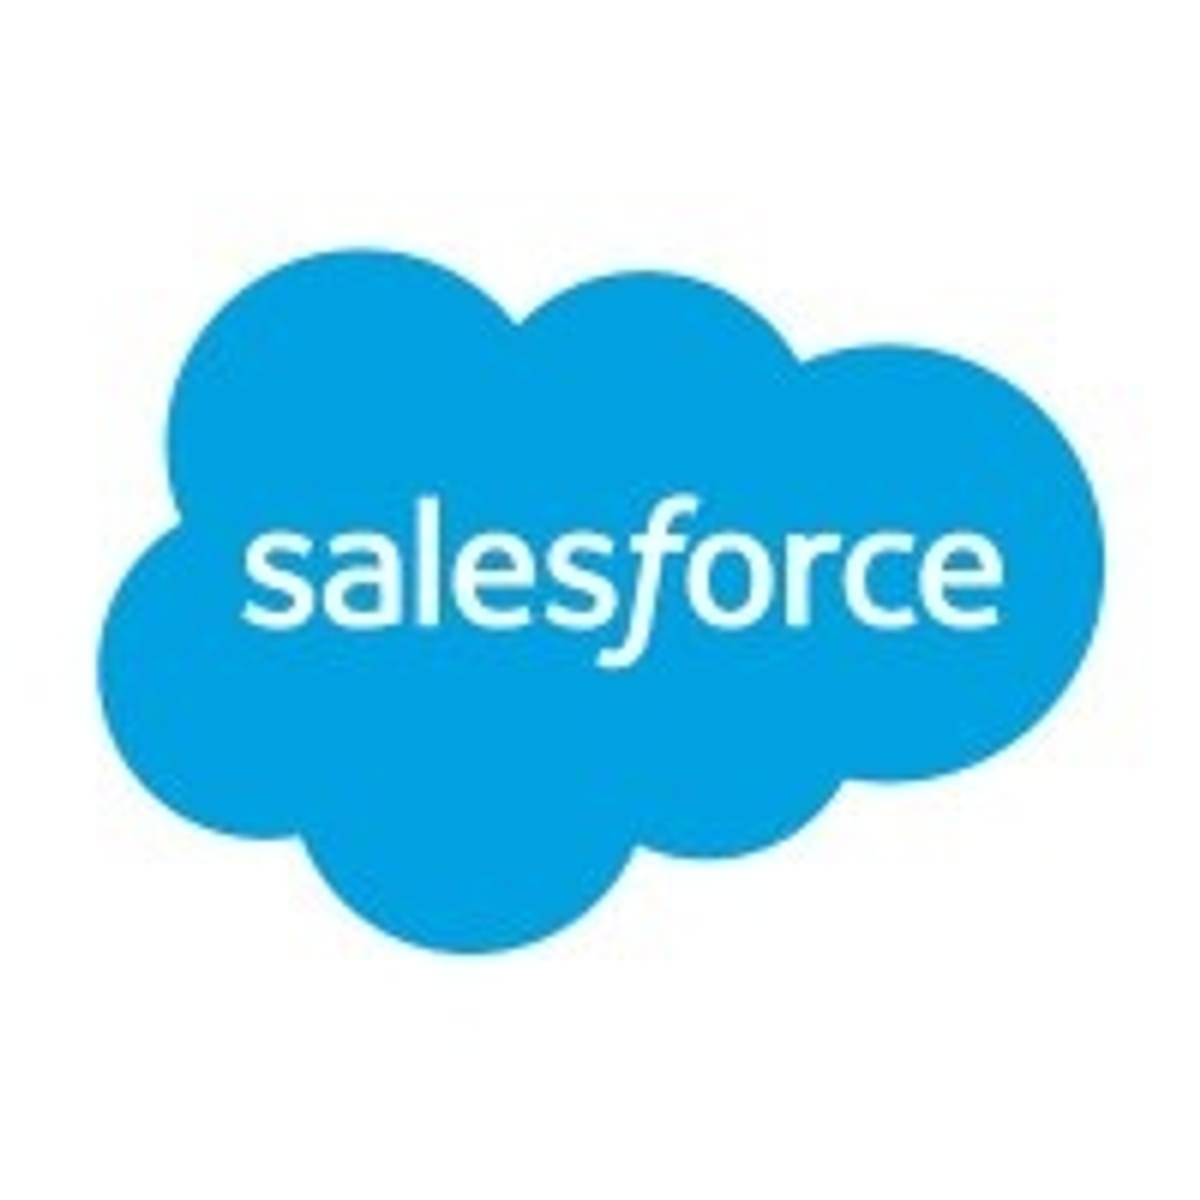 Atos koop Salesforce specialist Profit4SF image